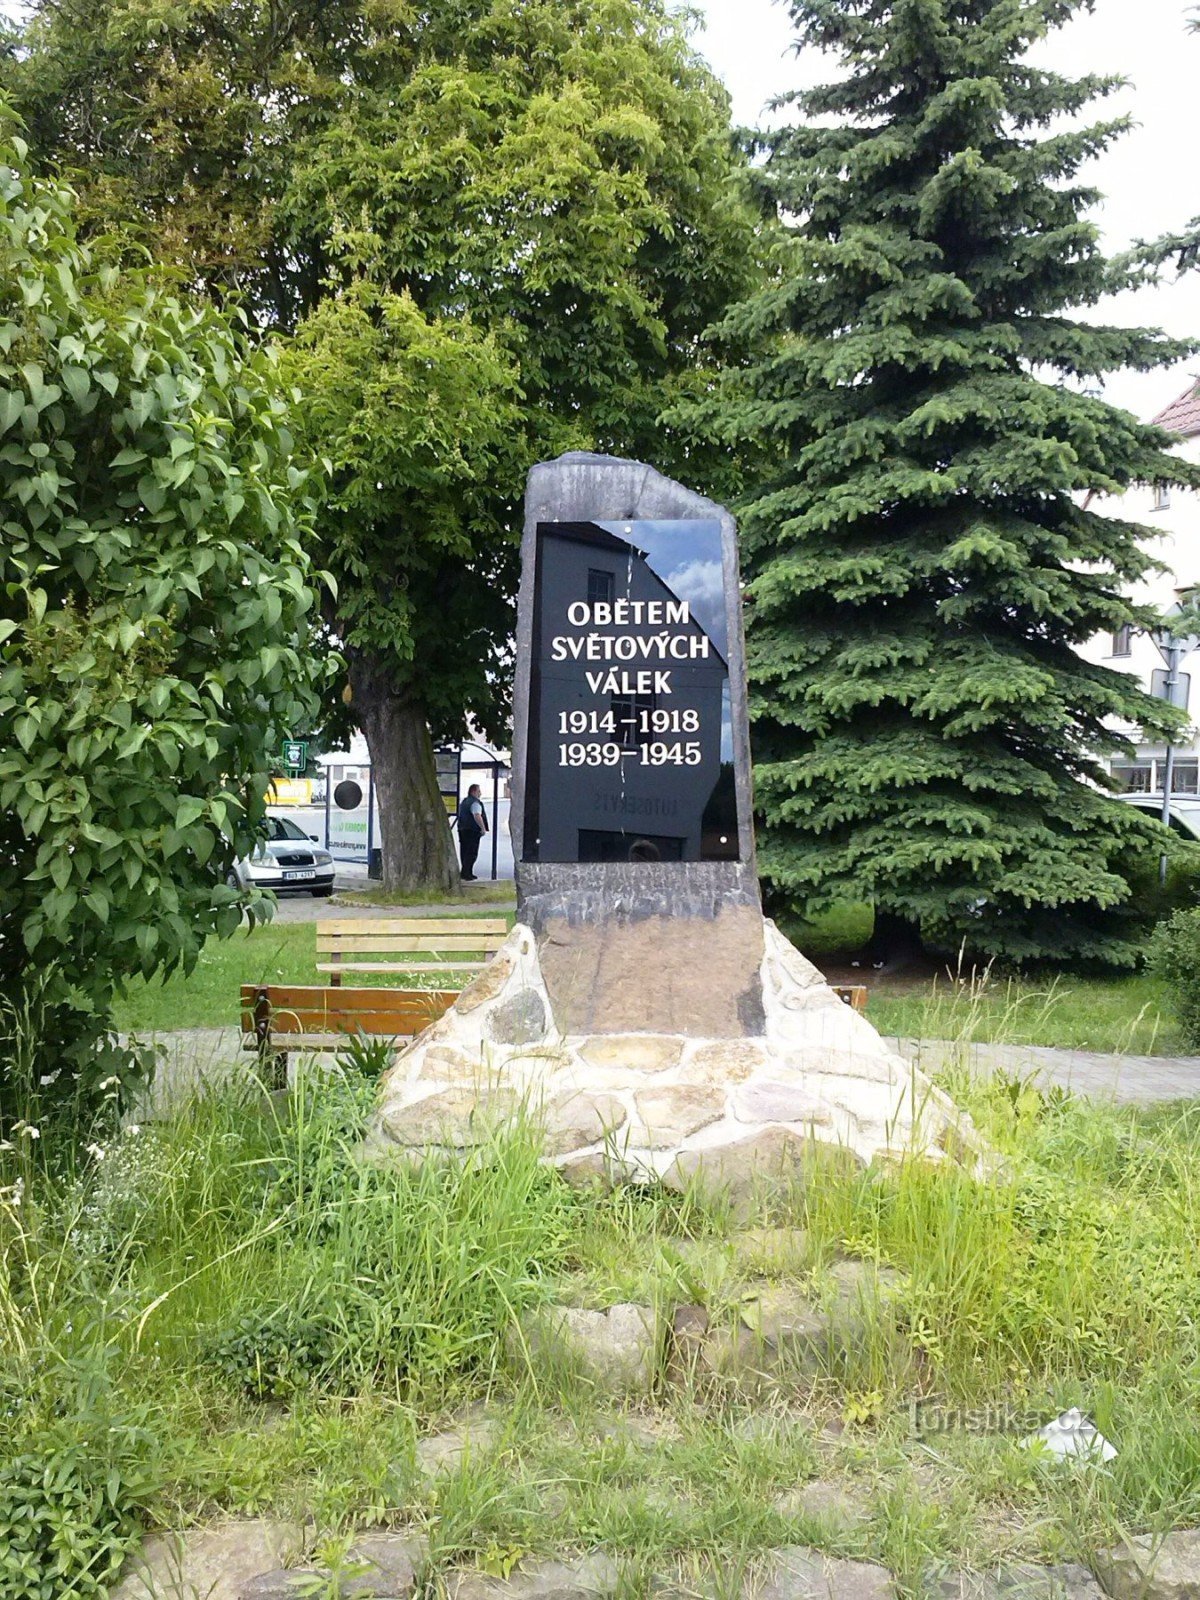 3. Monumento in paese alle vittime delle guerre mondiali